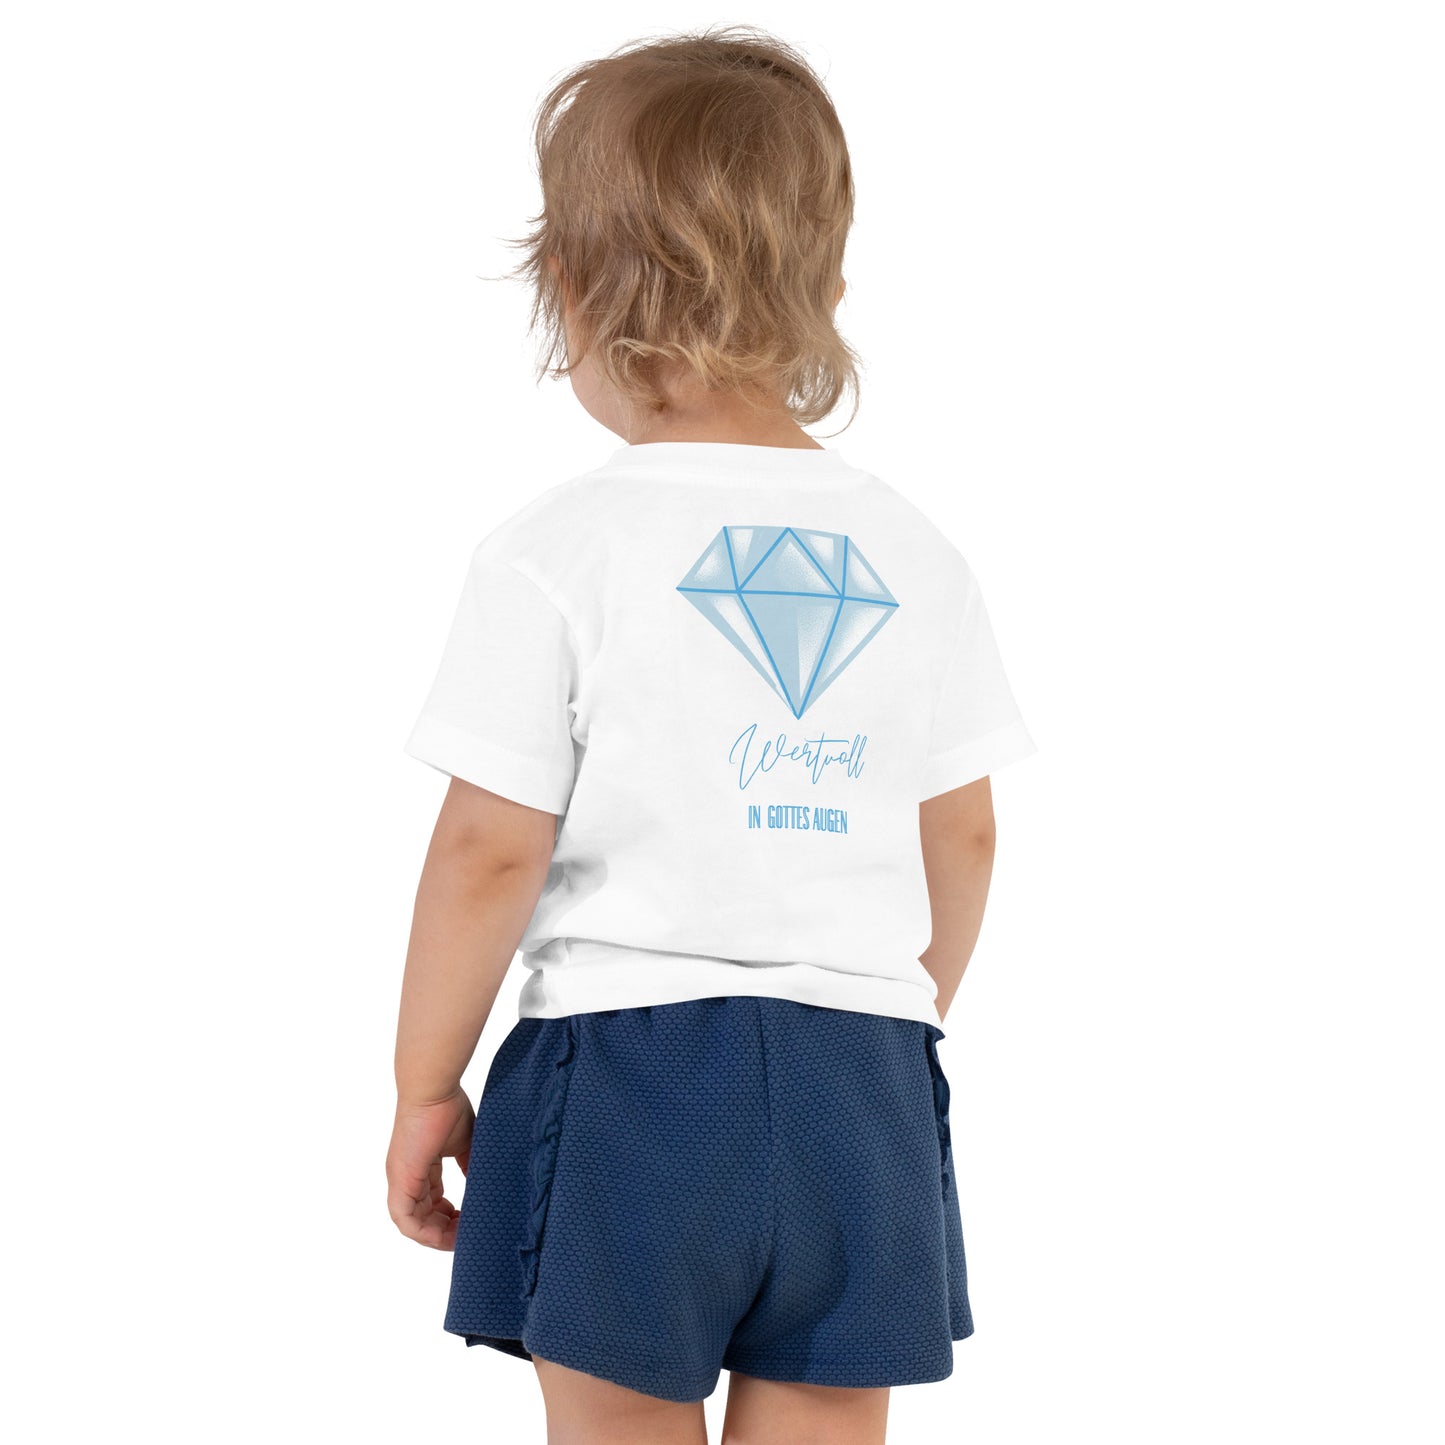 0-A-00 Wertvoll in GOTTES AUGEN-Kurzärmeliges Baby-T-Shirt